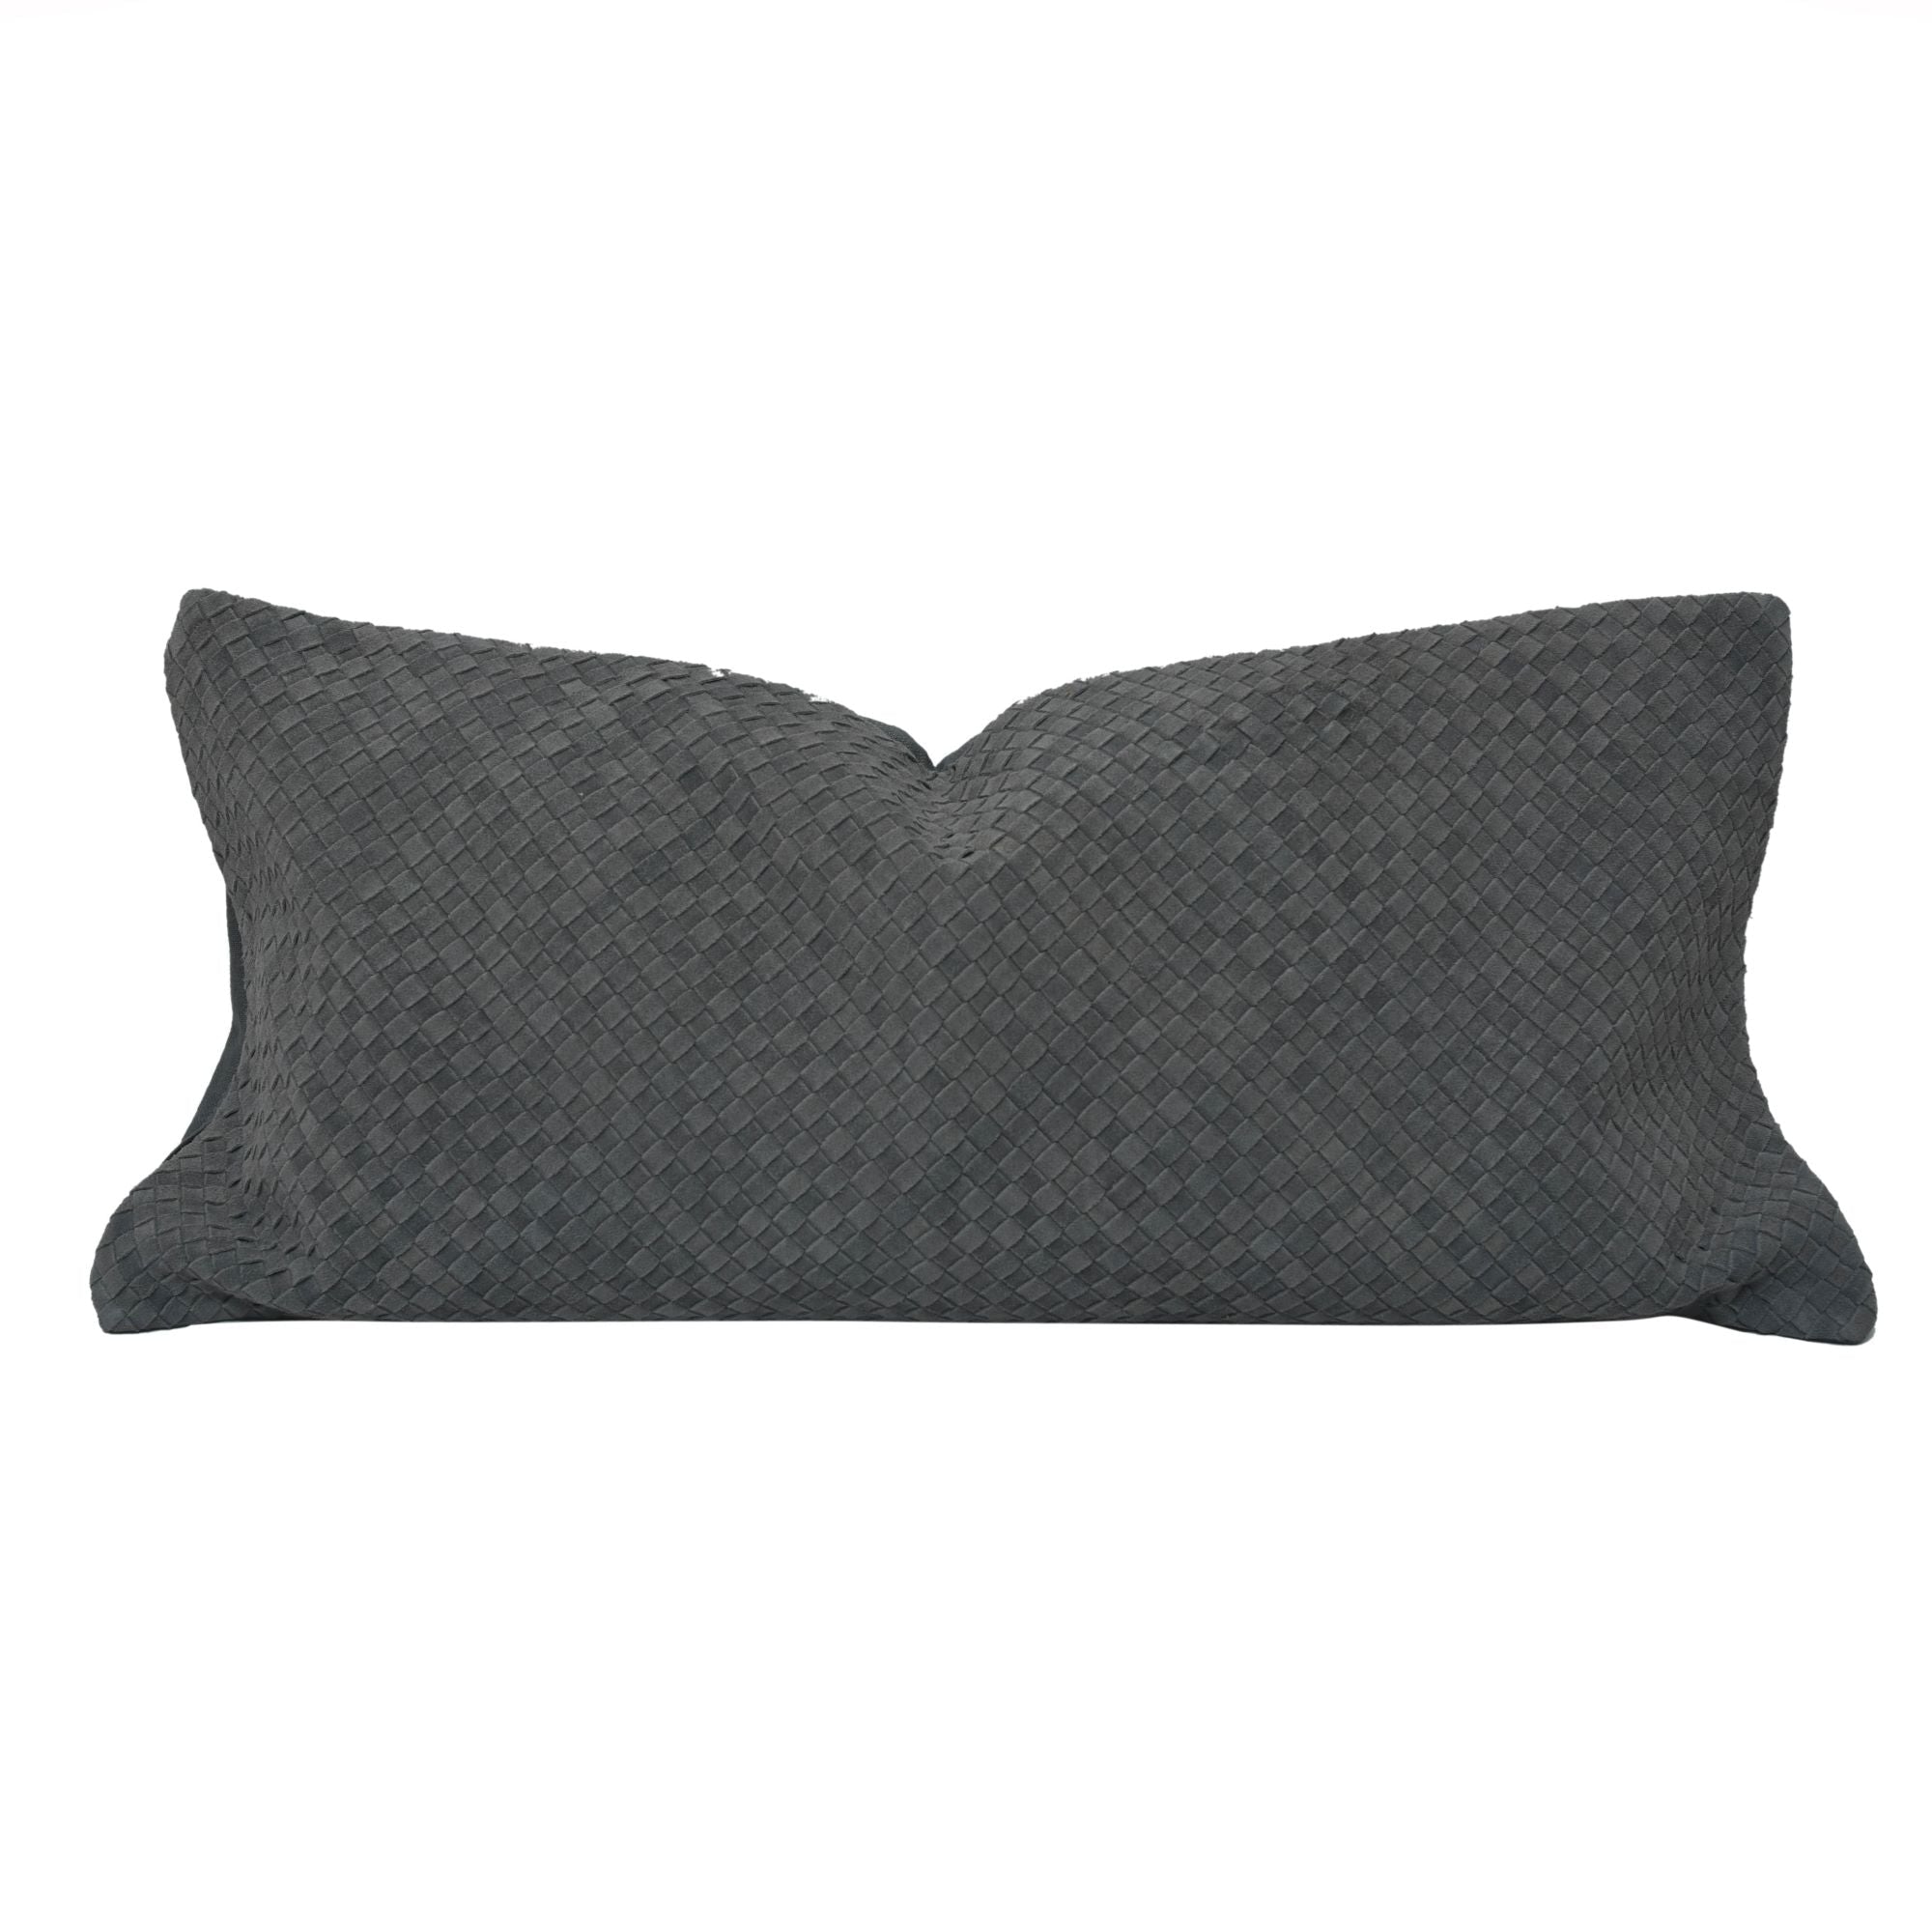 Woven Suede Lumbar Pillow Gray Leather Pillow